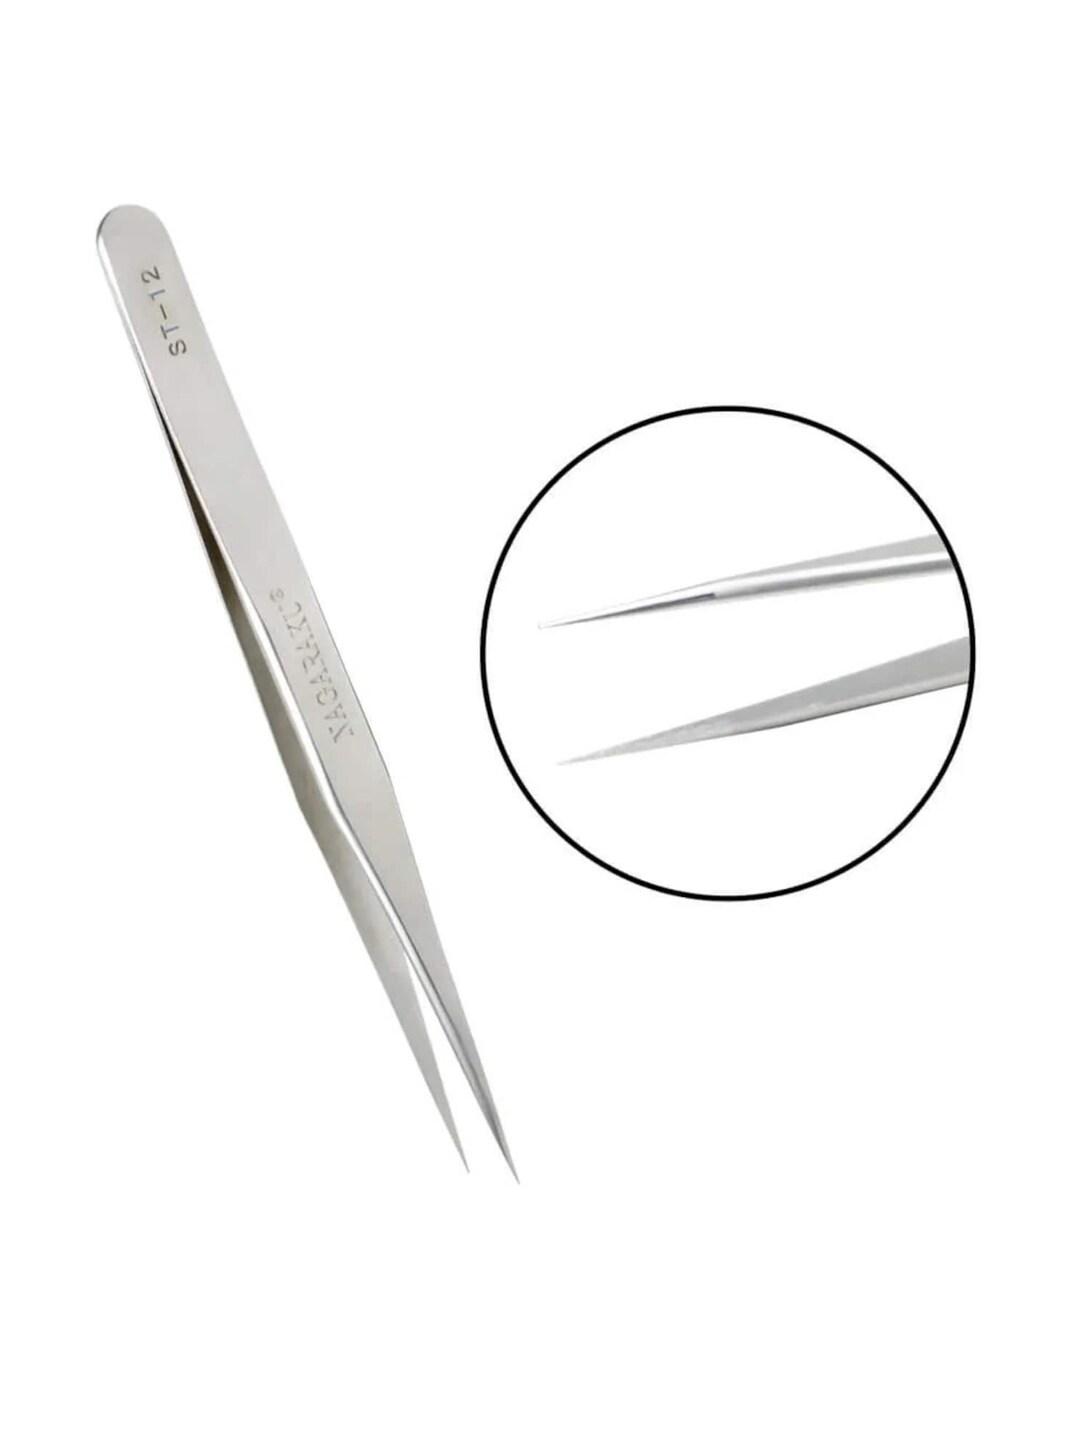 NAGARAKU False Eyelash ST-12 Stainless Steel Non-Magnetic 3D Accurate Tweezers - Silver